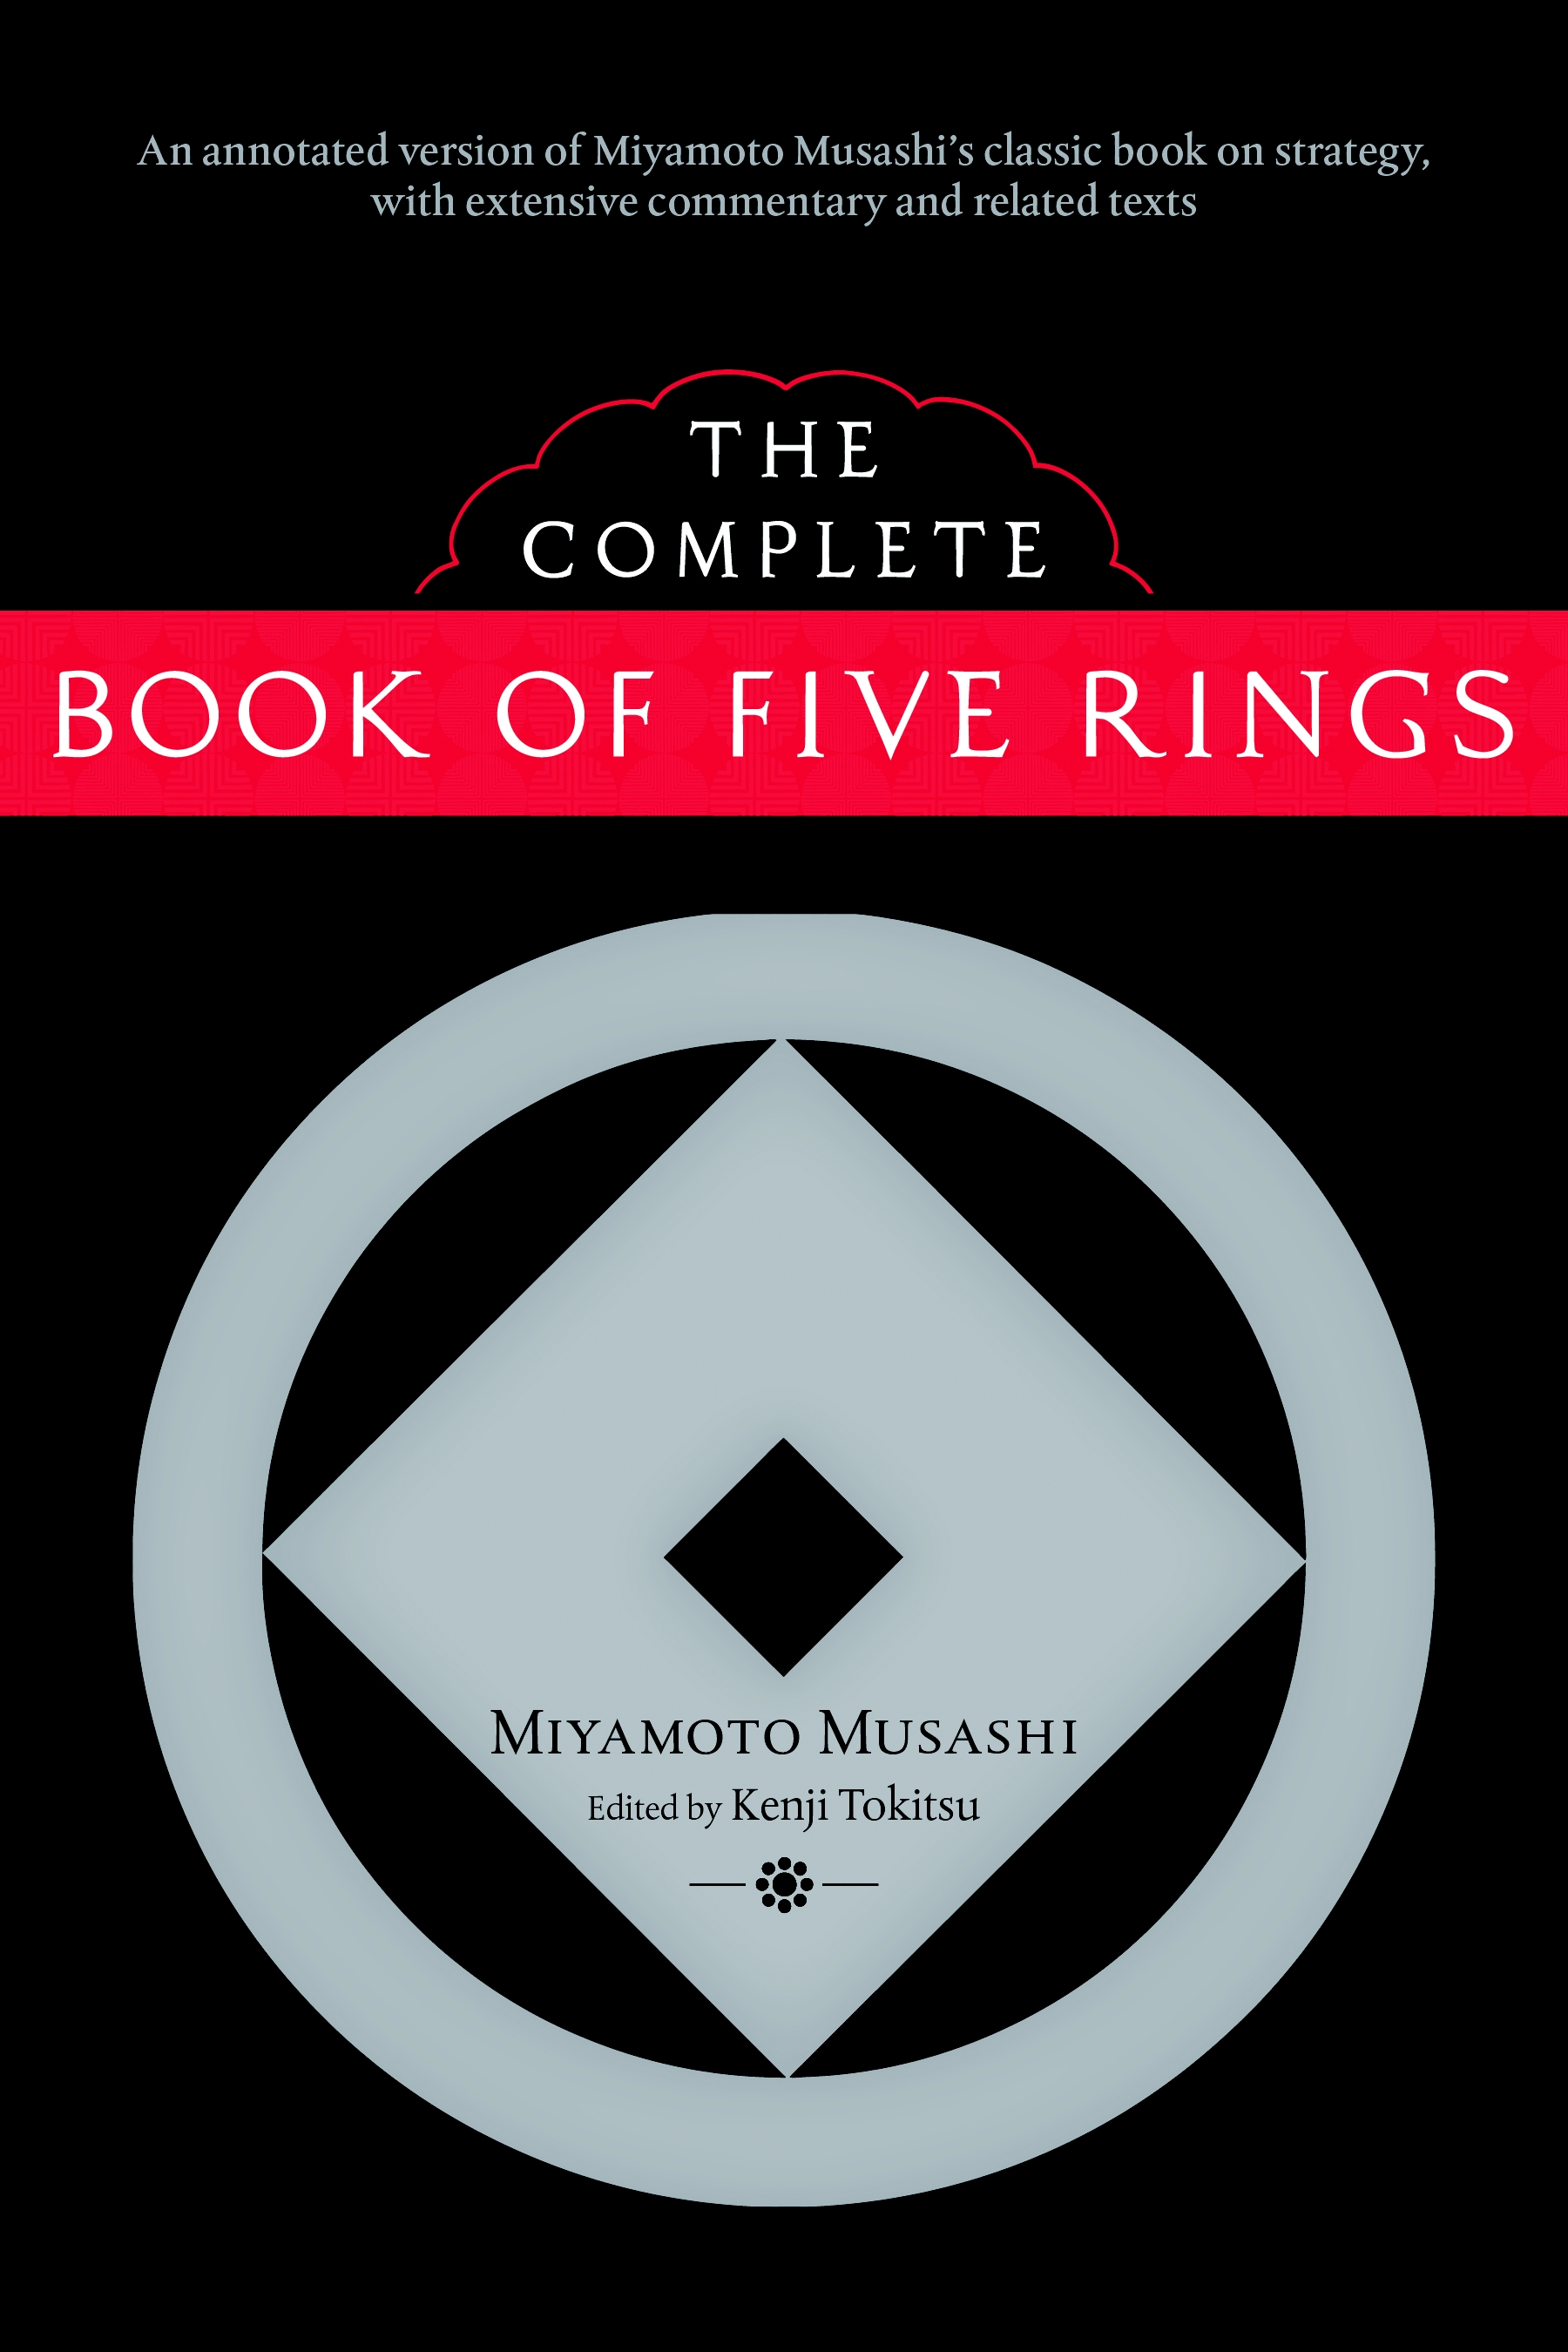 a book of five rings by miyamoto musashi